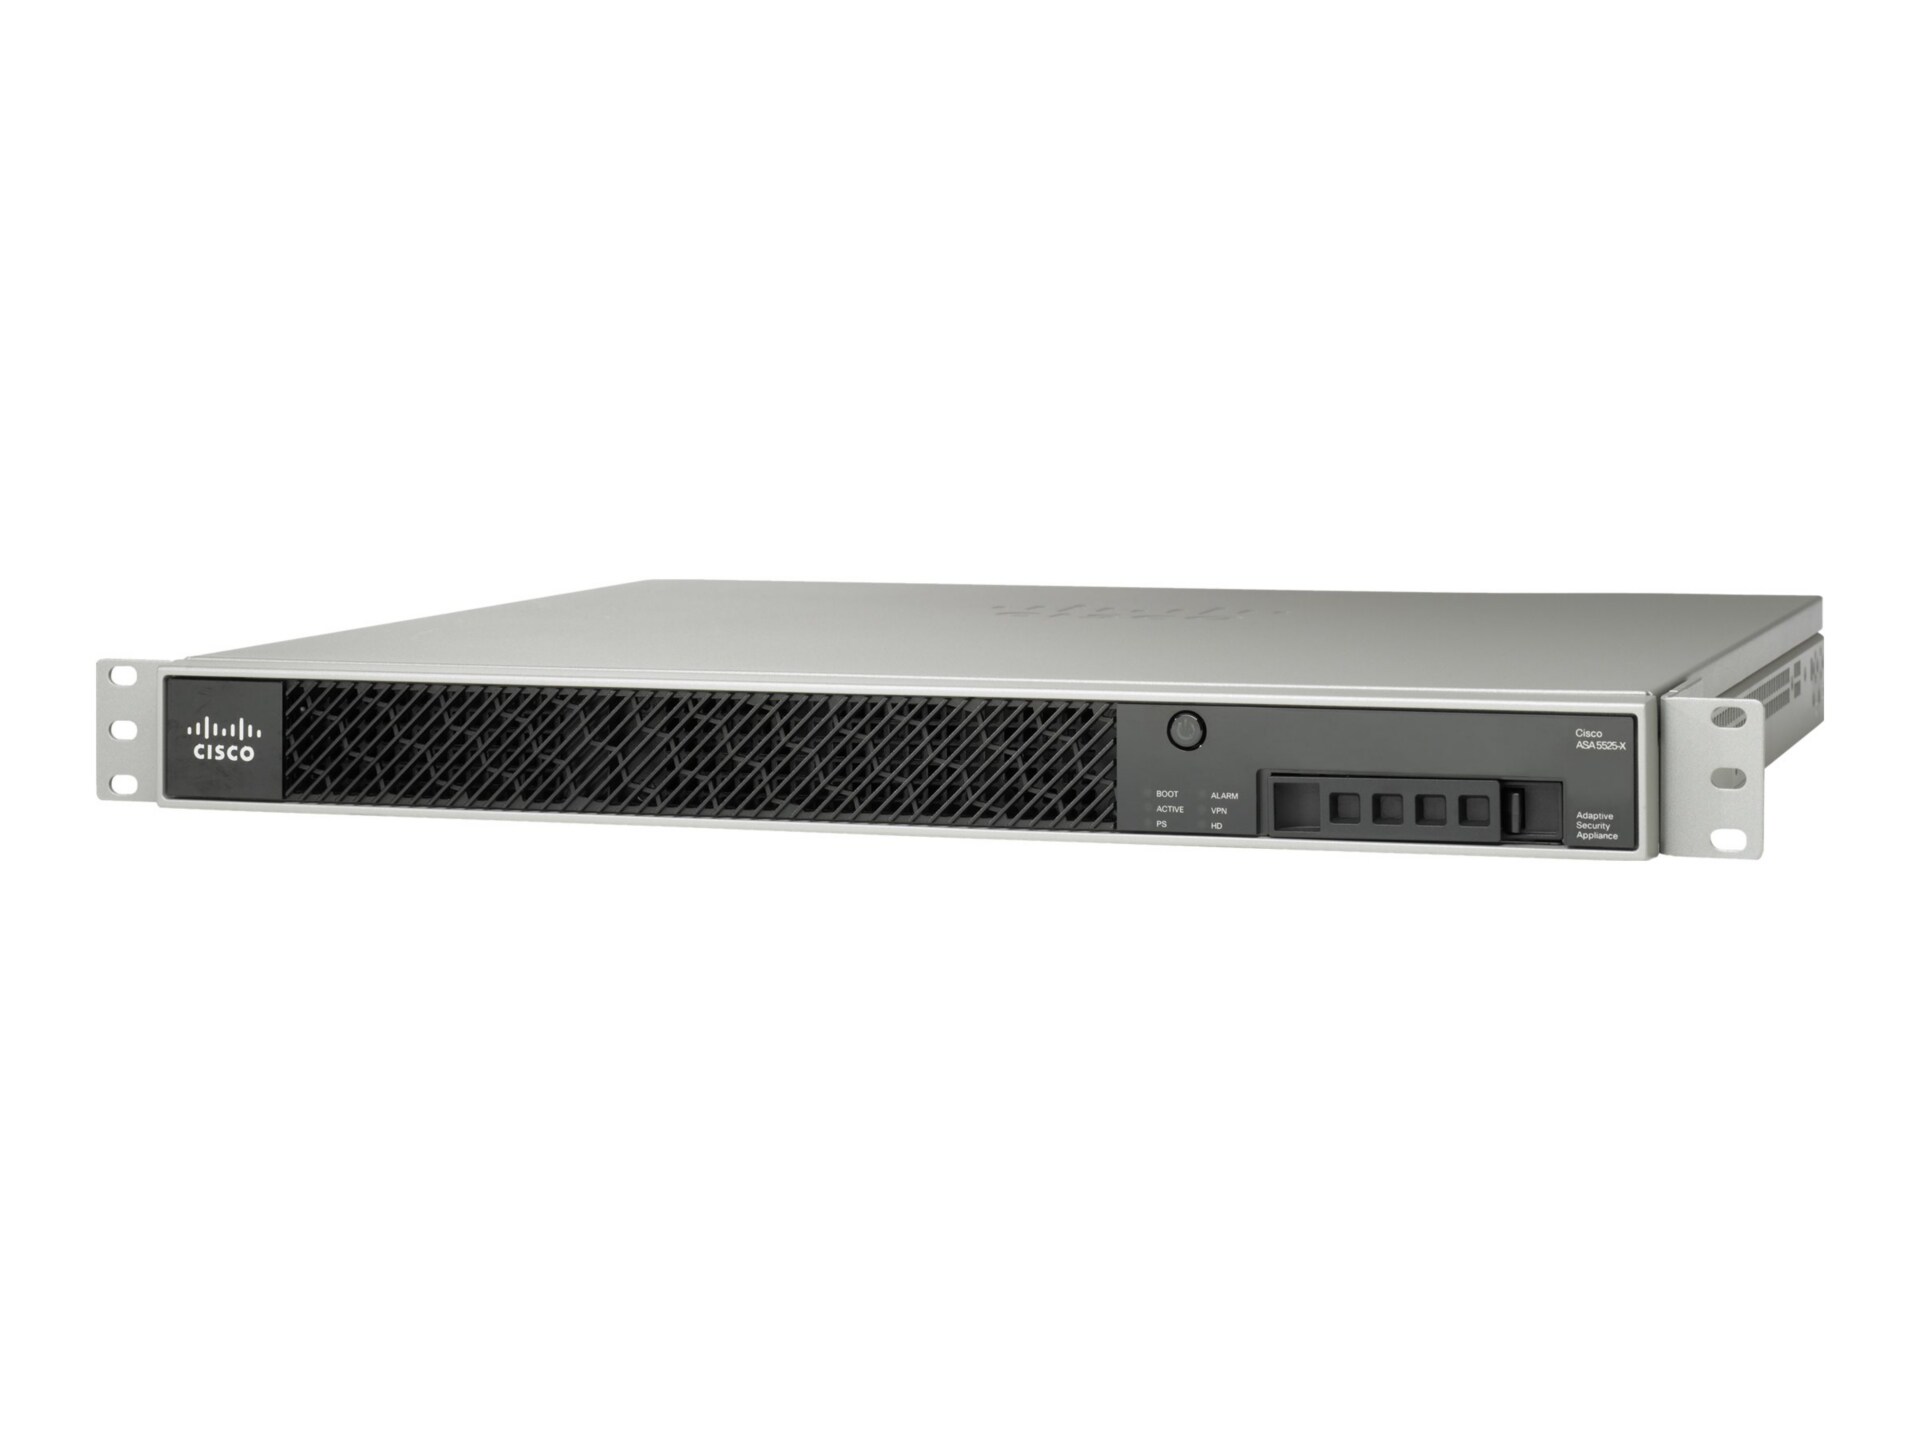 Cisco ASA 5512-X Firewall Edition - security appliance